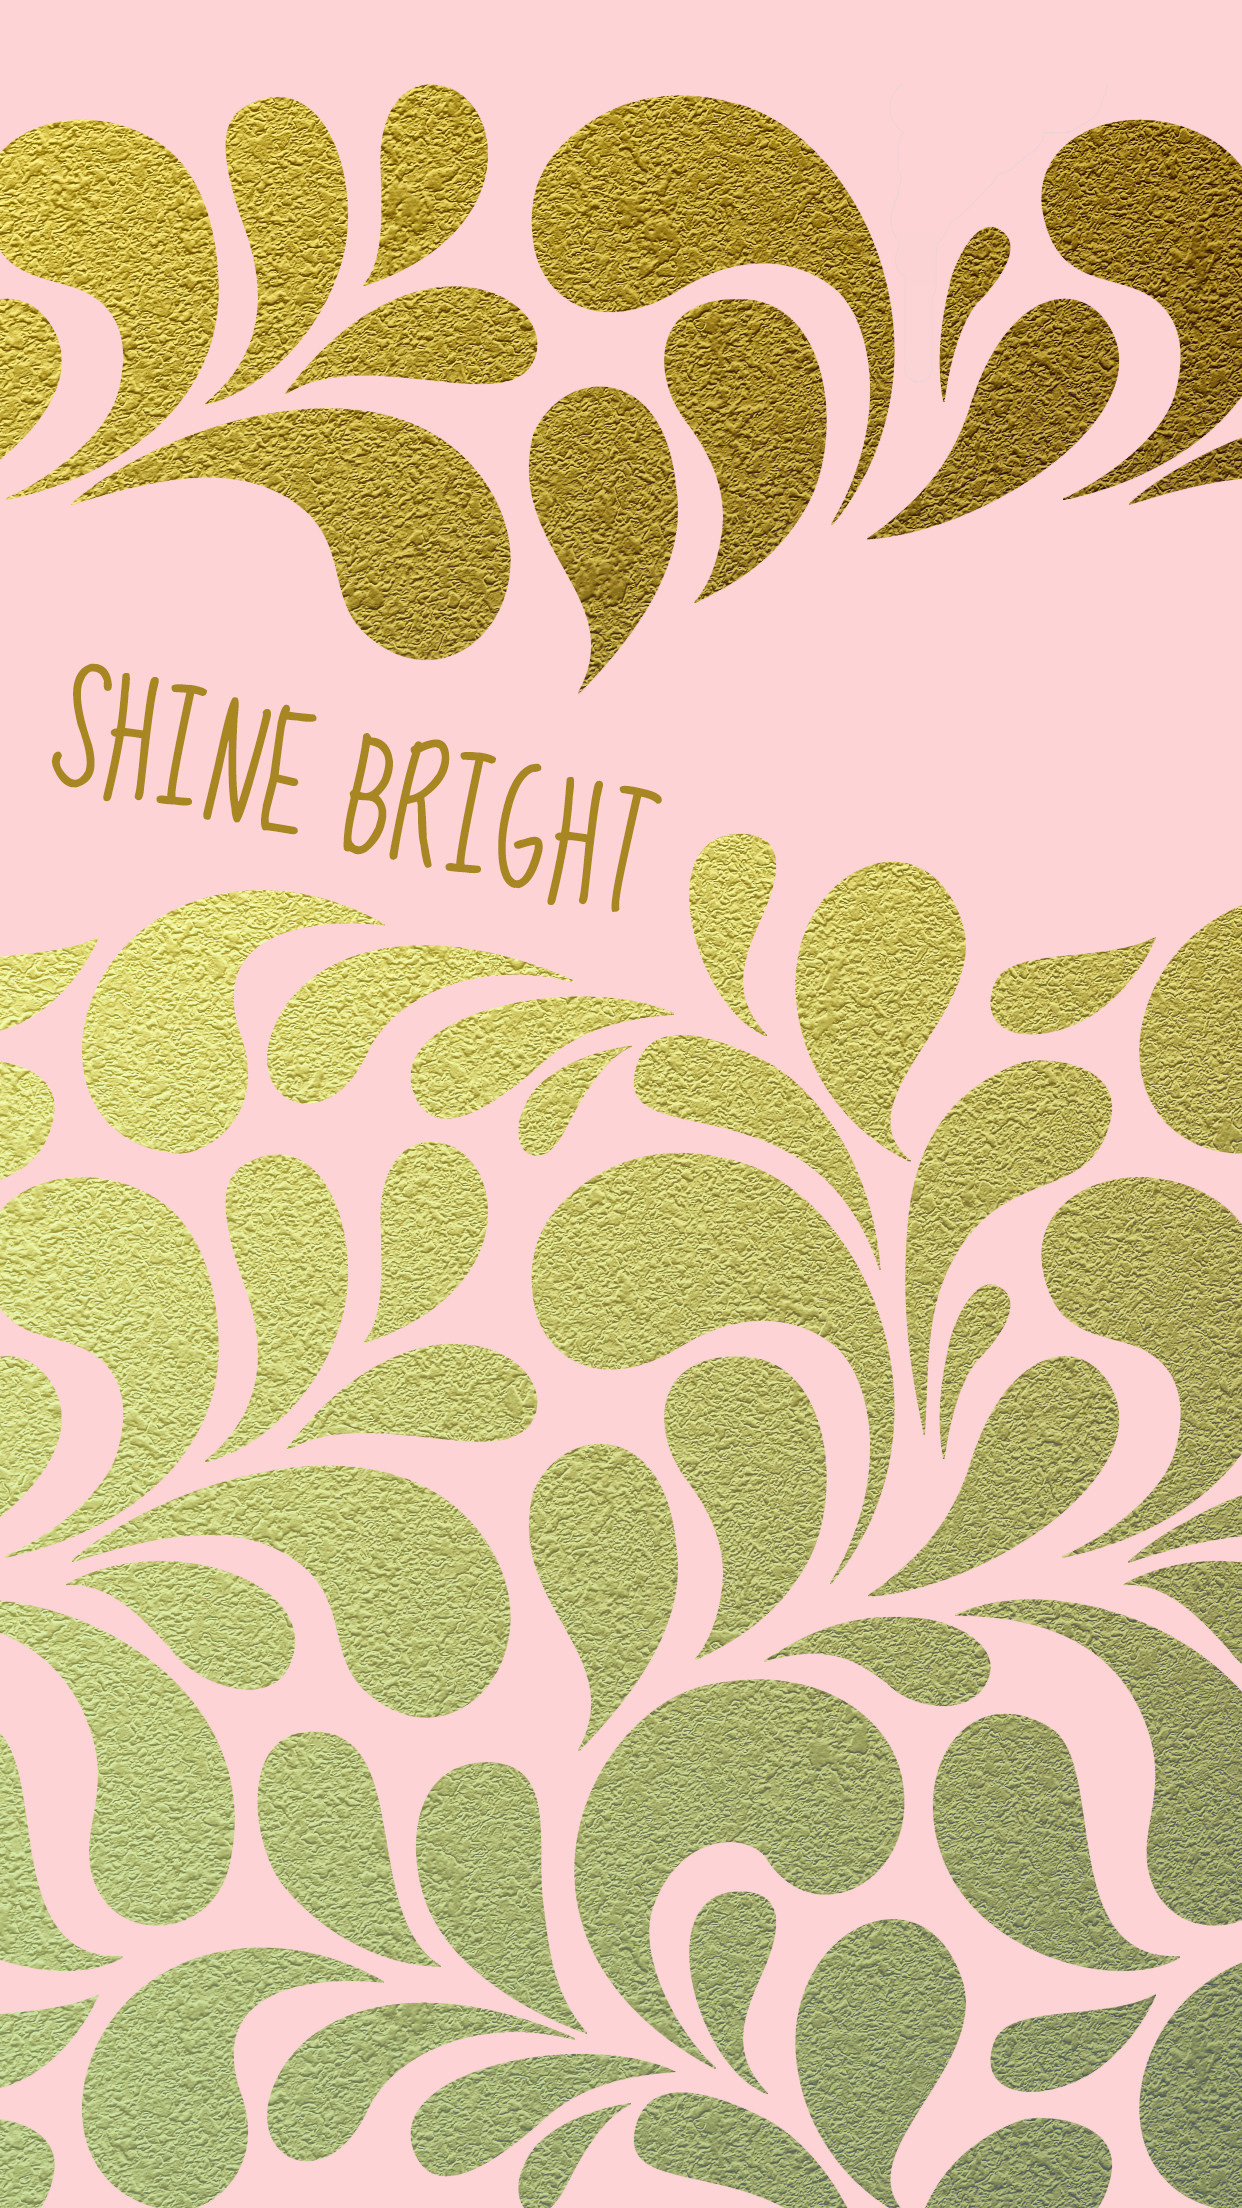 Shine Bright Blush Pink Gold iPhone Wallpaper Background